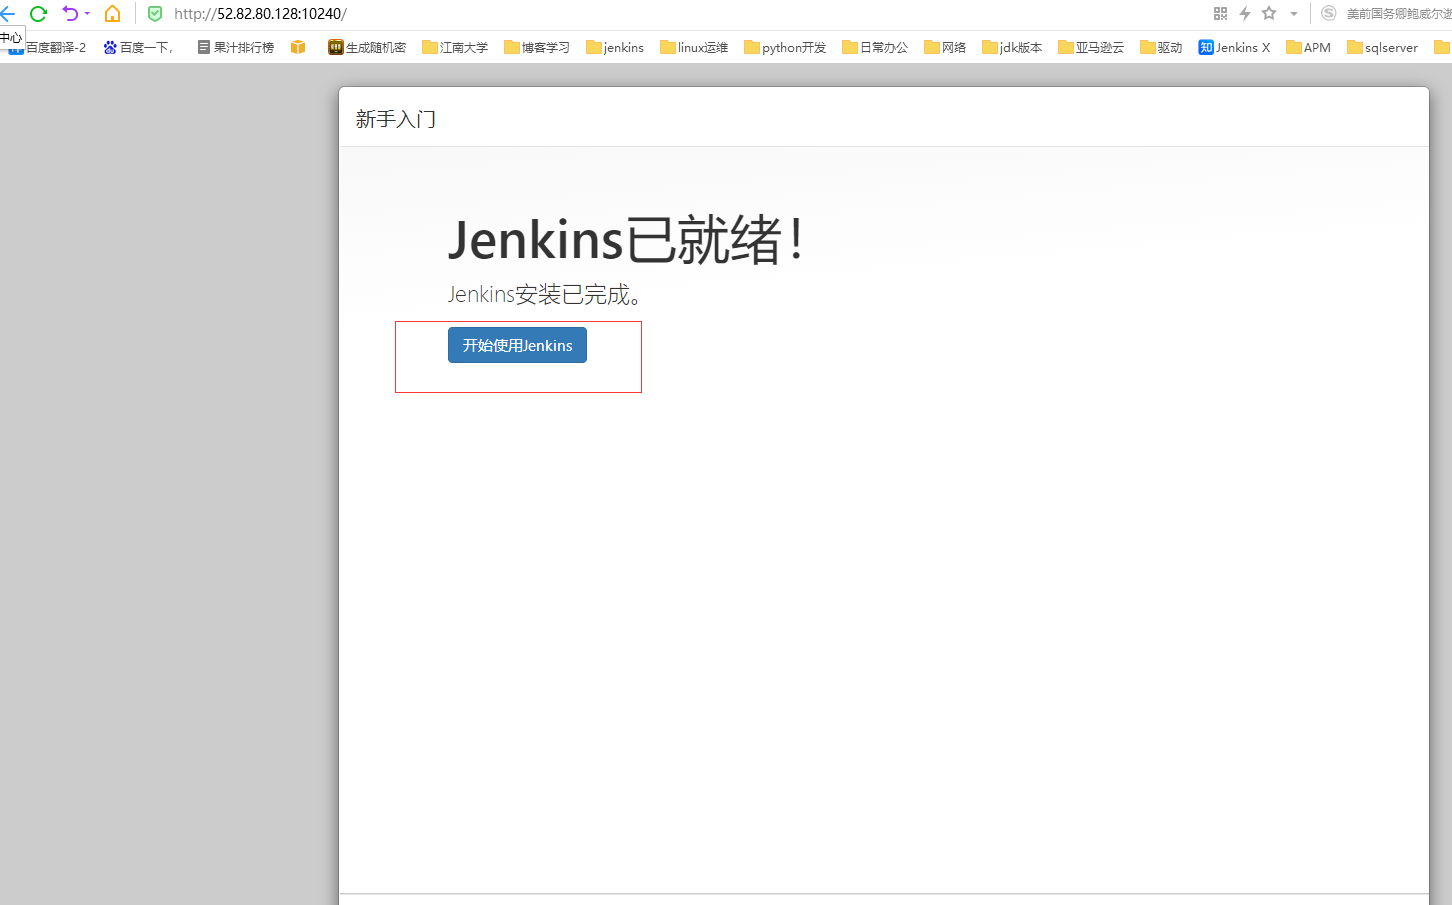 Docker安装Jenkins-2.249.3-1.1的详细过程